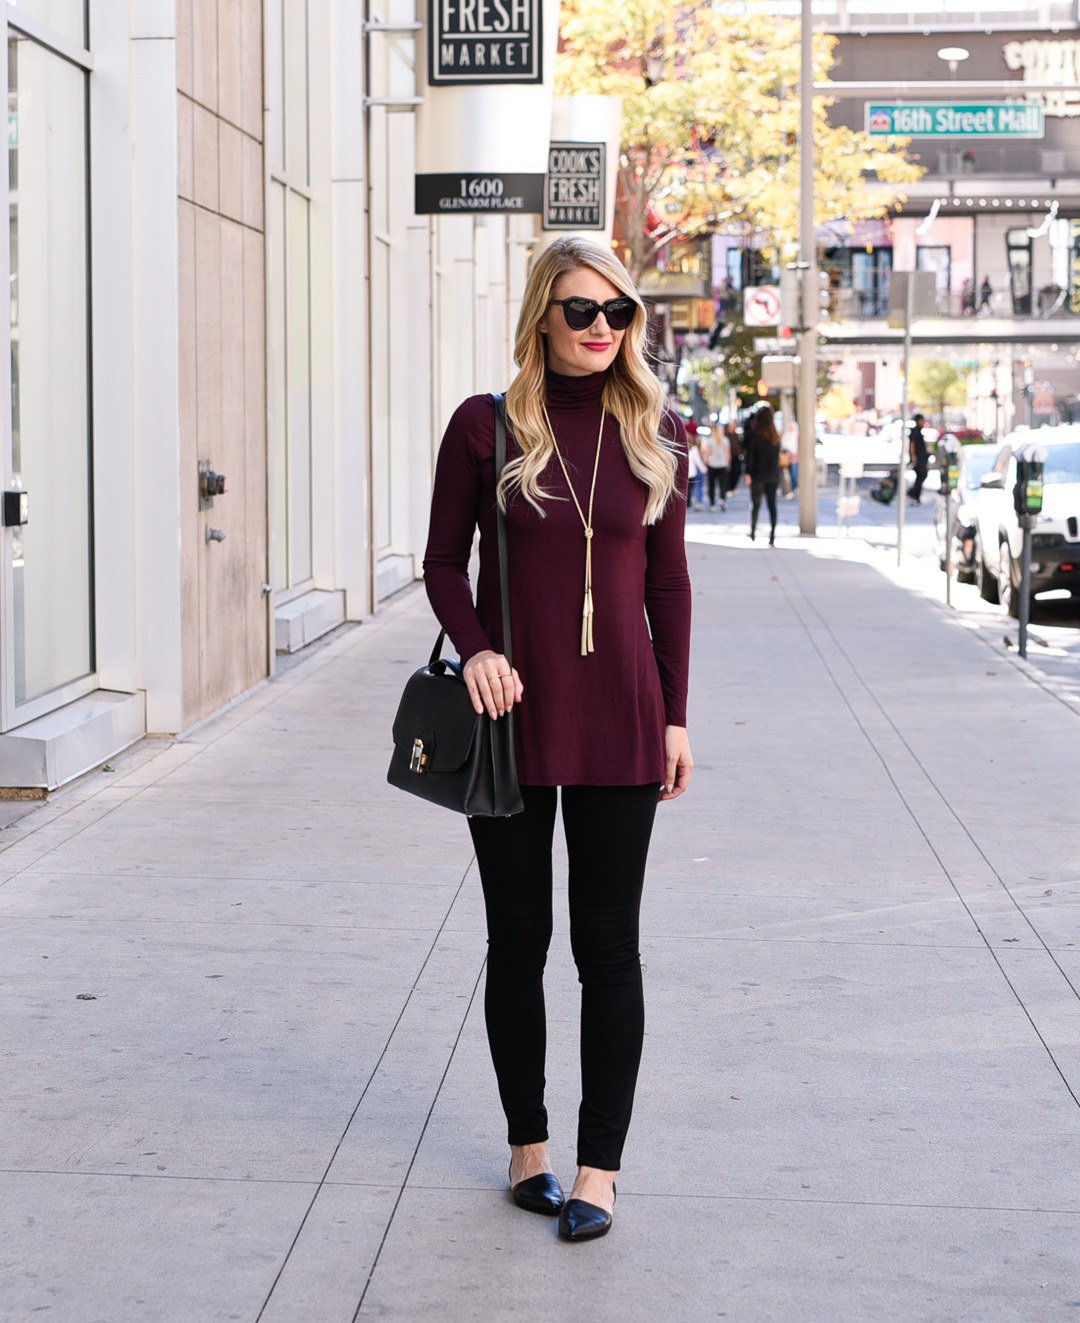 OOTD 10.17.18: Burgundy Sweater Tunic